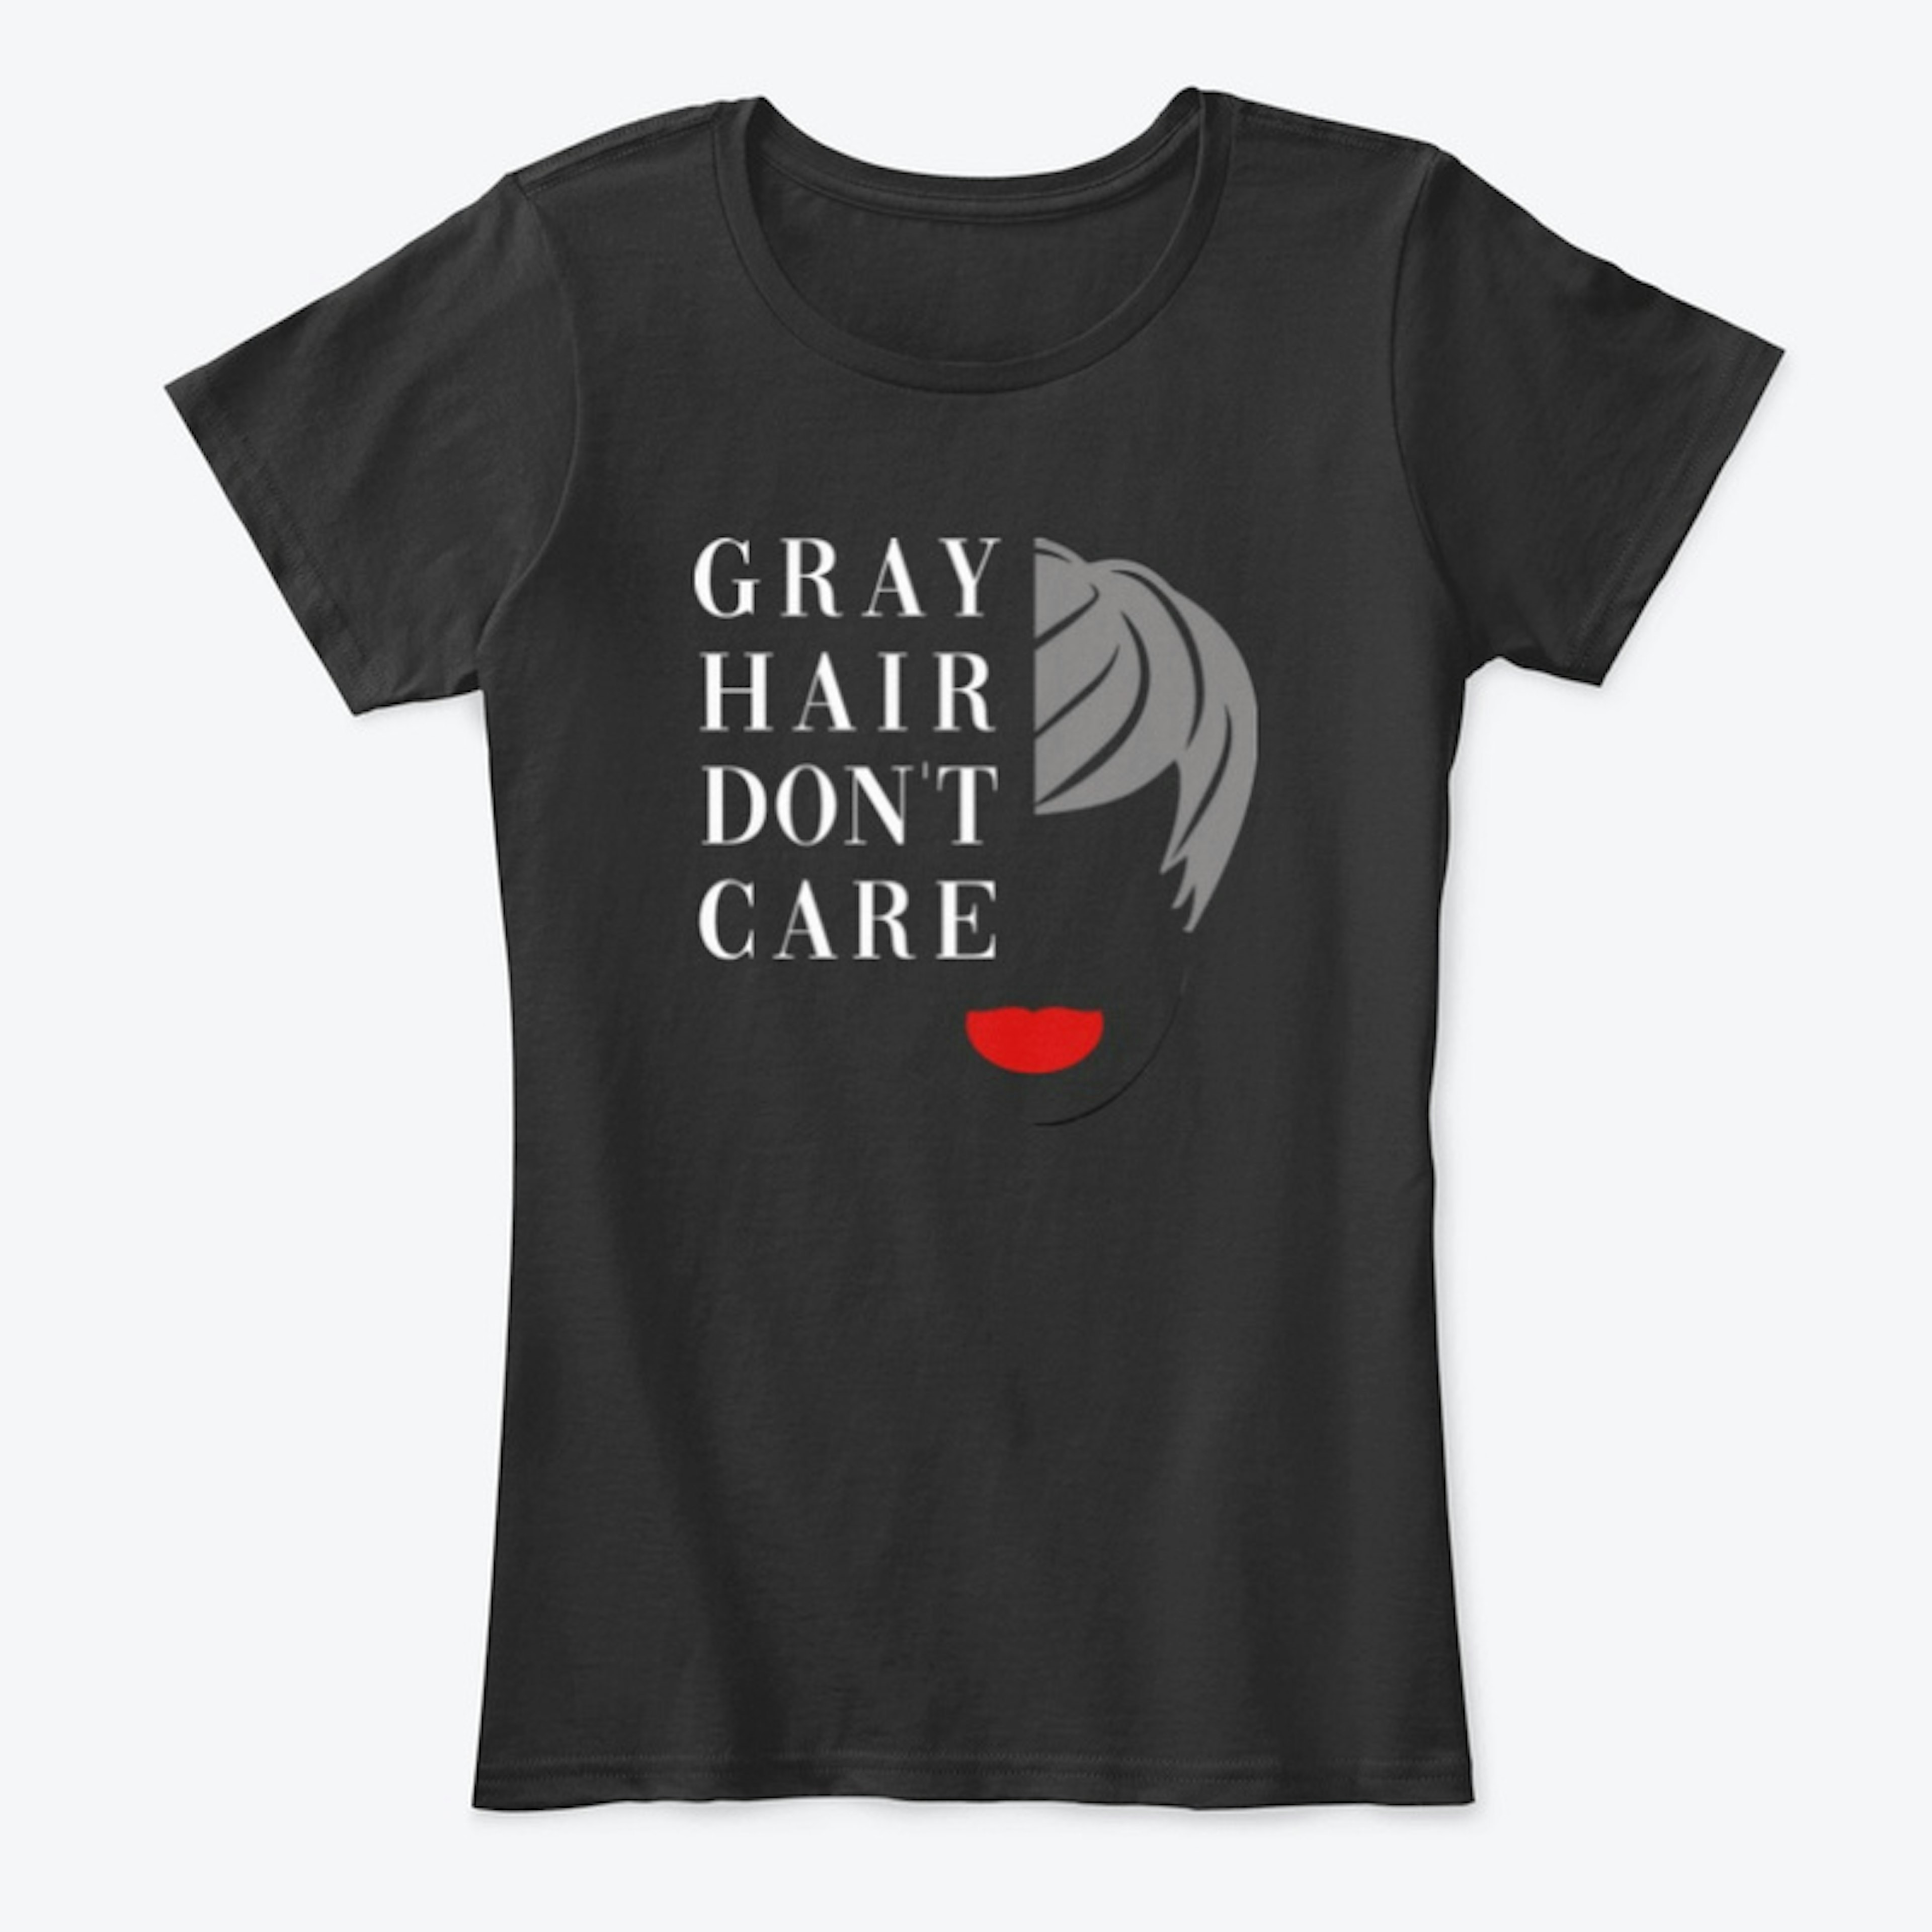 SHORT GRAY HAIR DON'T CARE